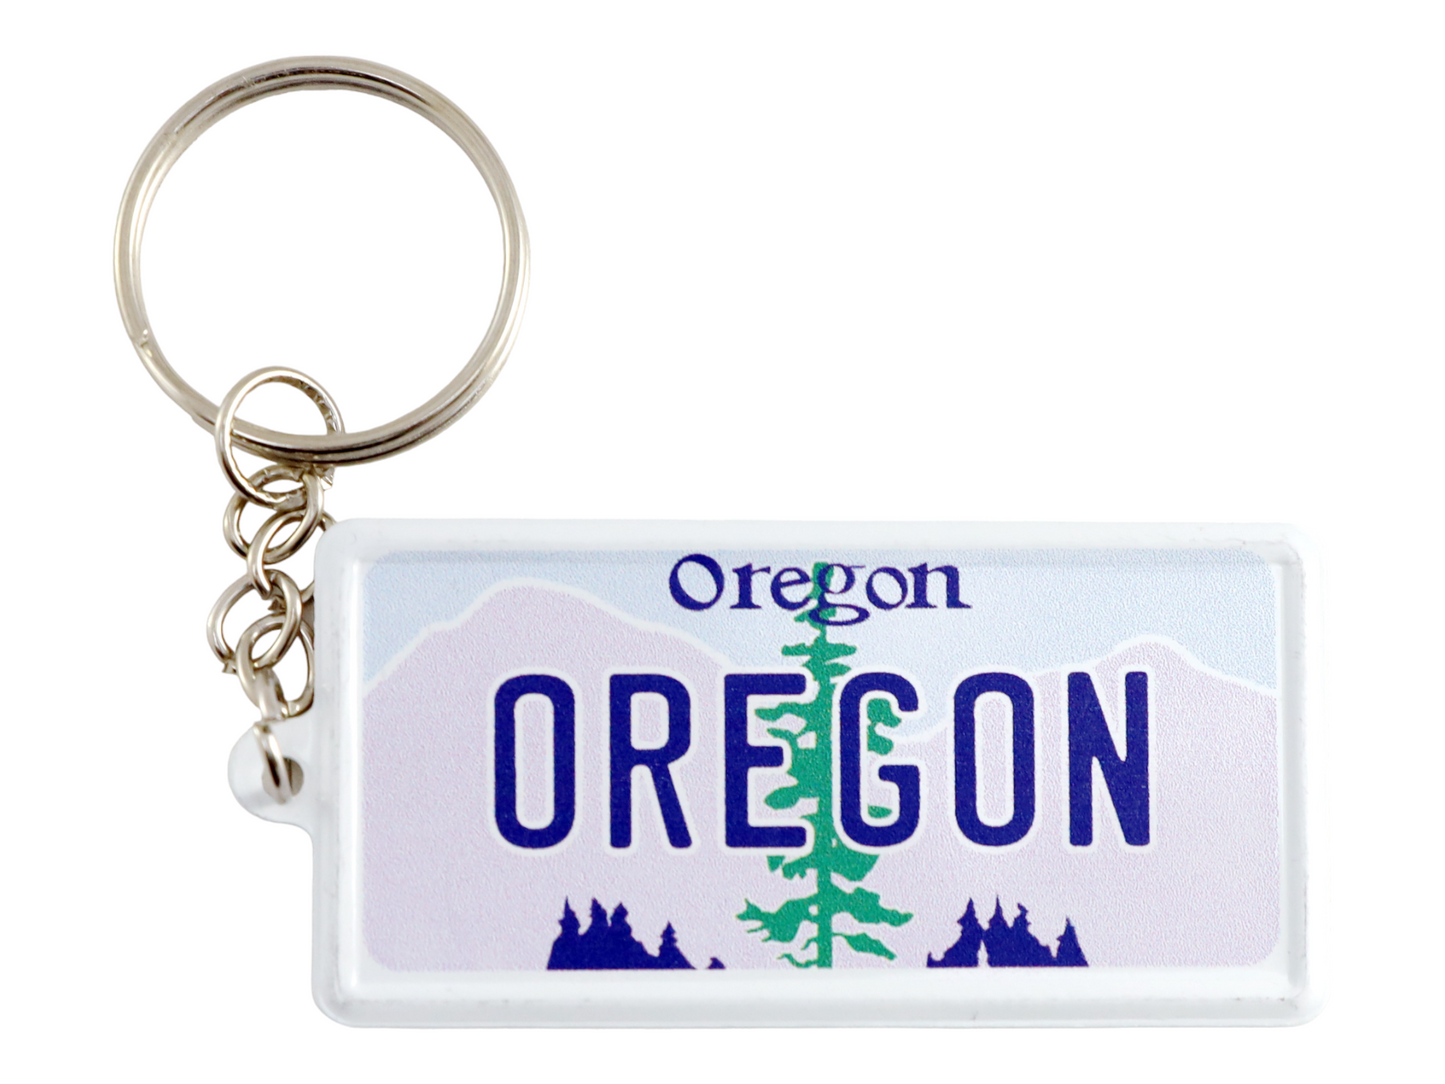 Oregon License Plate Aluminum Ultra-Slim Rectangular Souvenir Keychain 2.5" X 1.25"x 0.06"